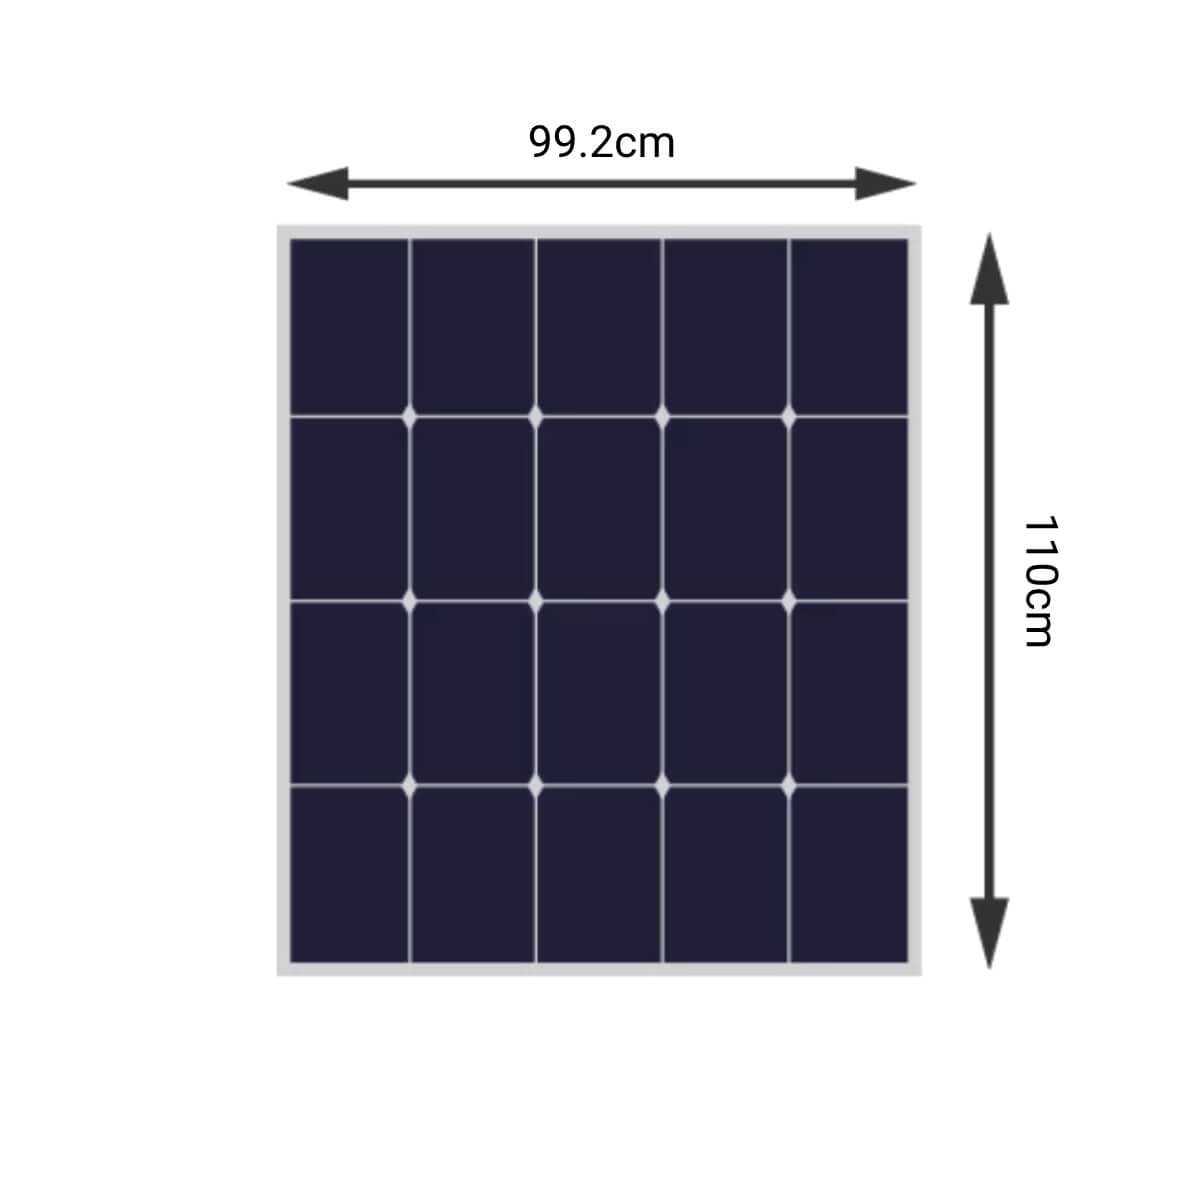 600W Solar Panel Kit – 3x 200W dimensions square